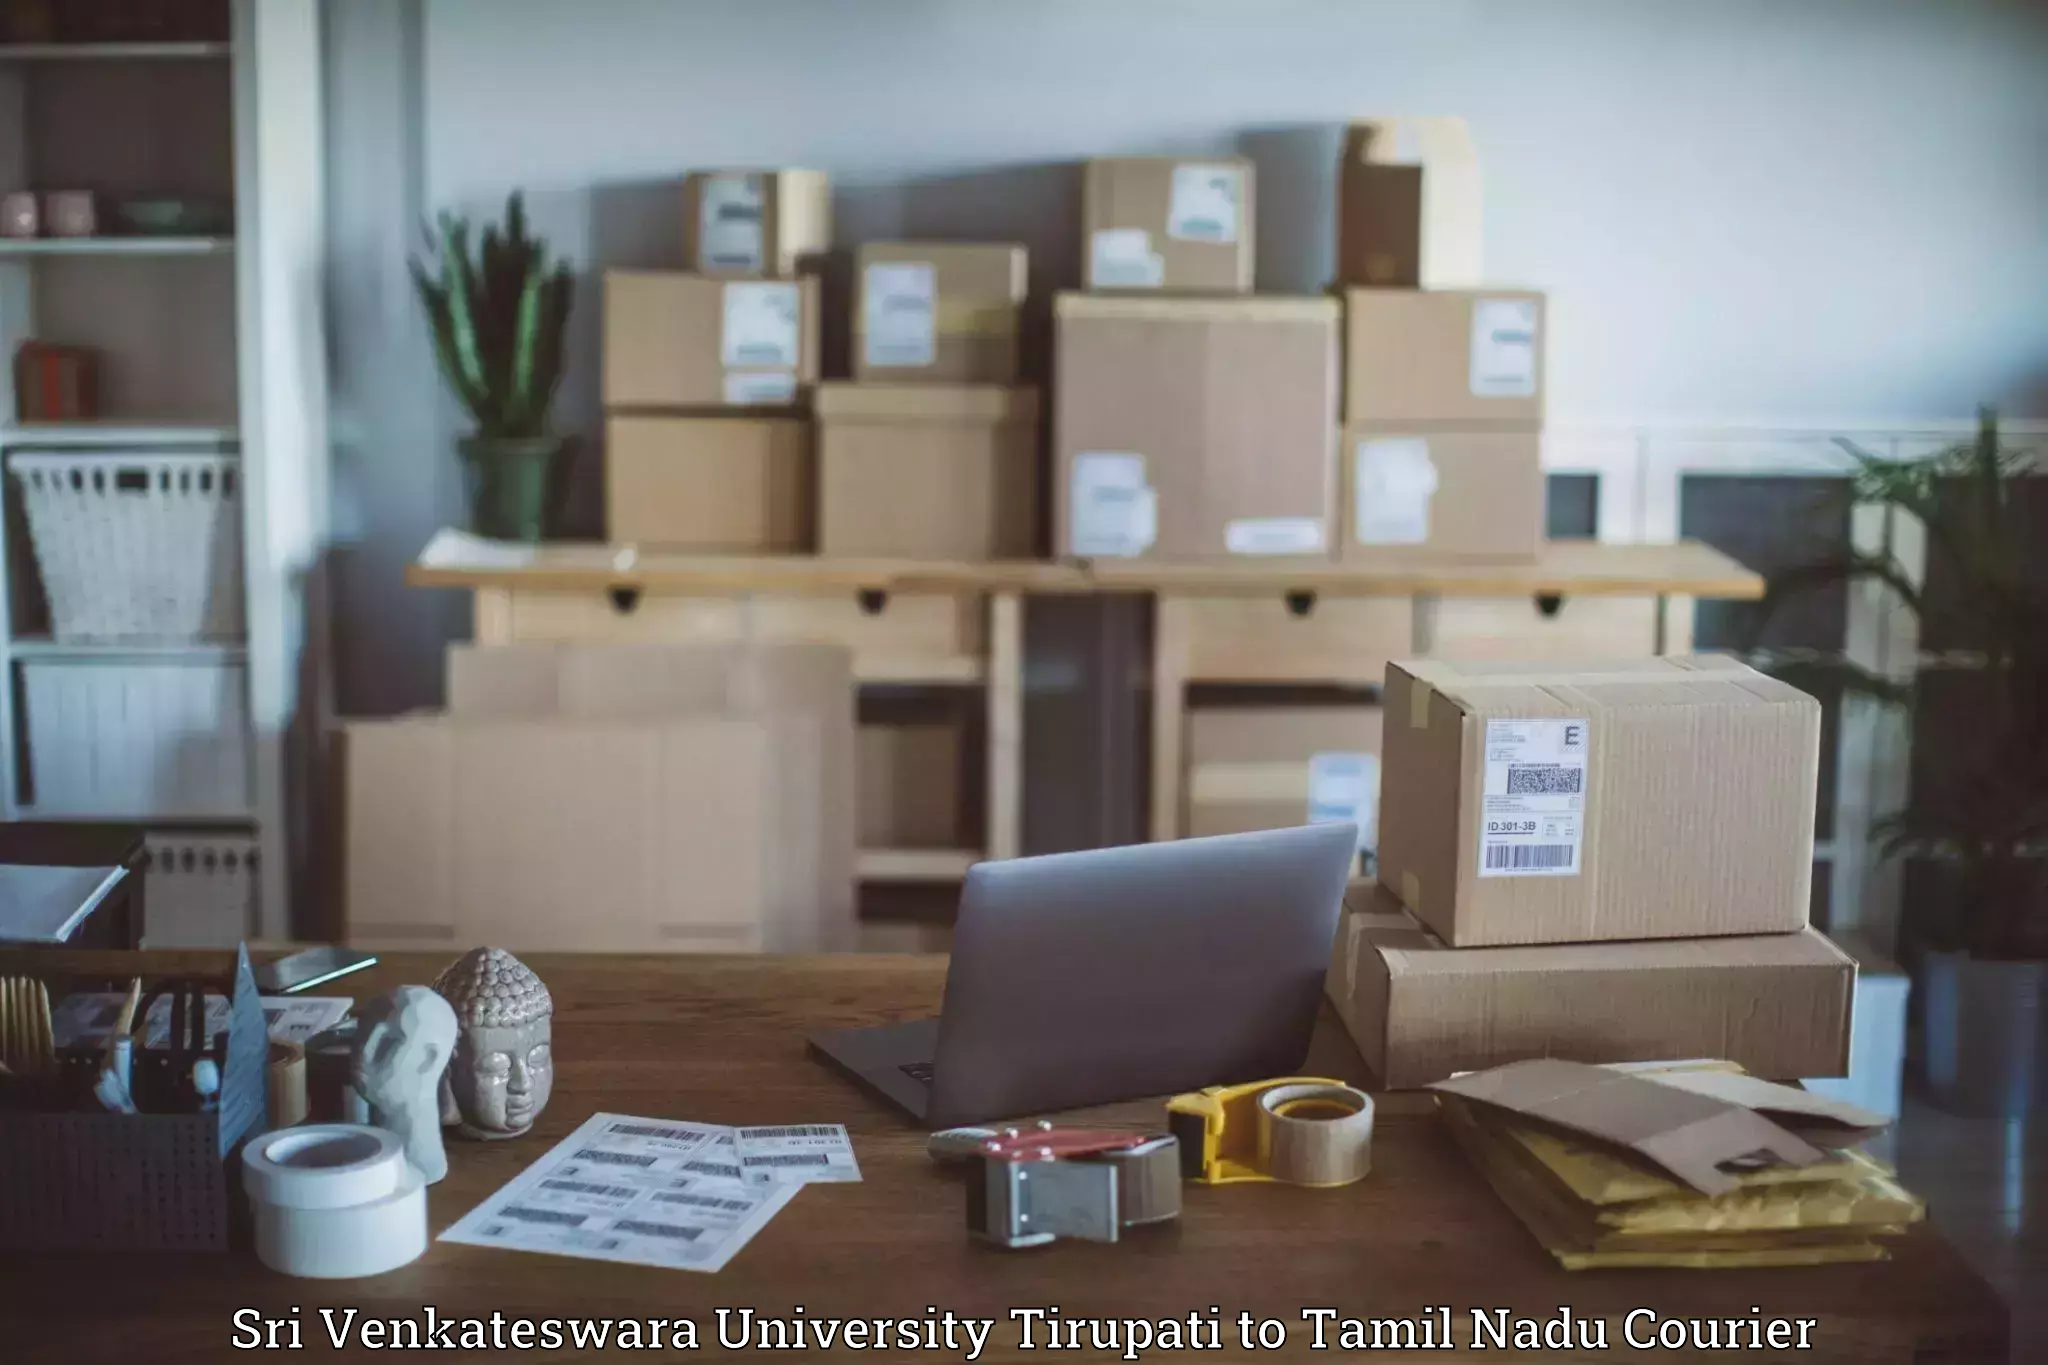 Large package courier Sri Venkateswara University Tirupati to IIT Madras